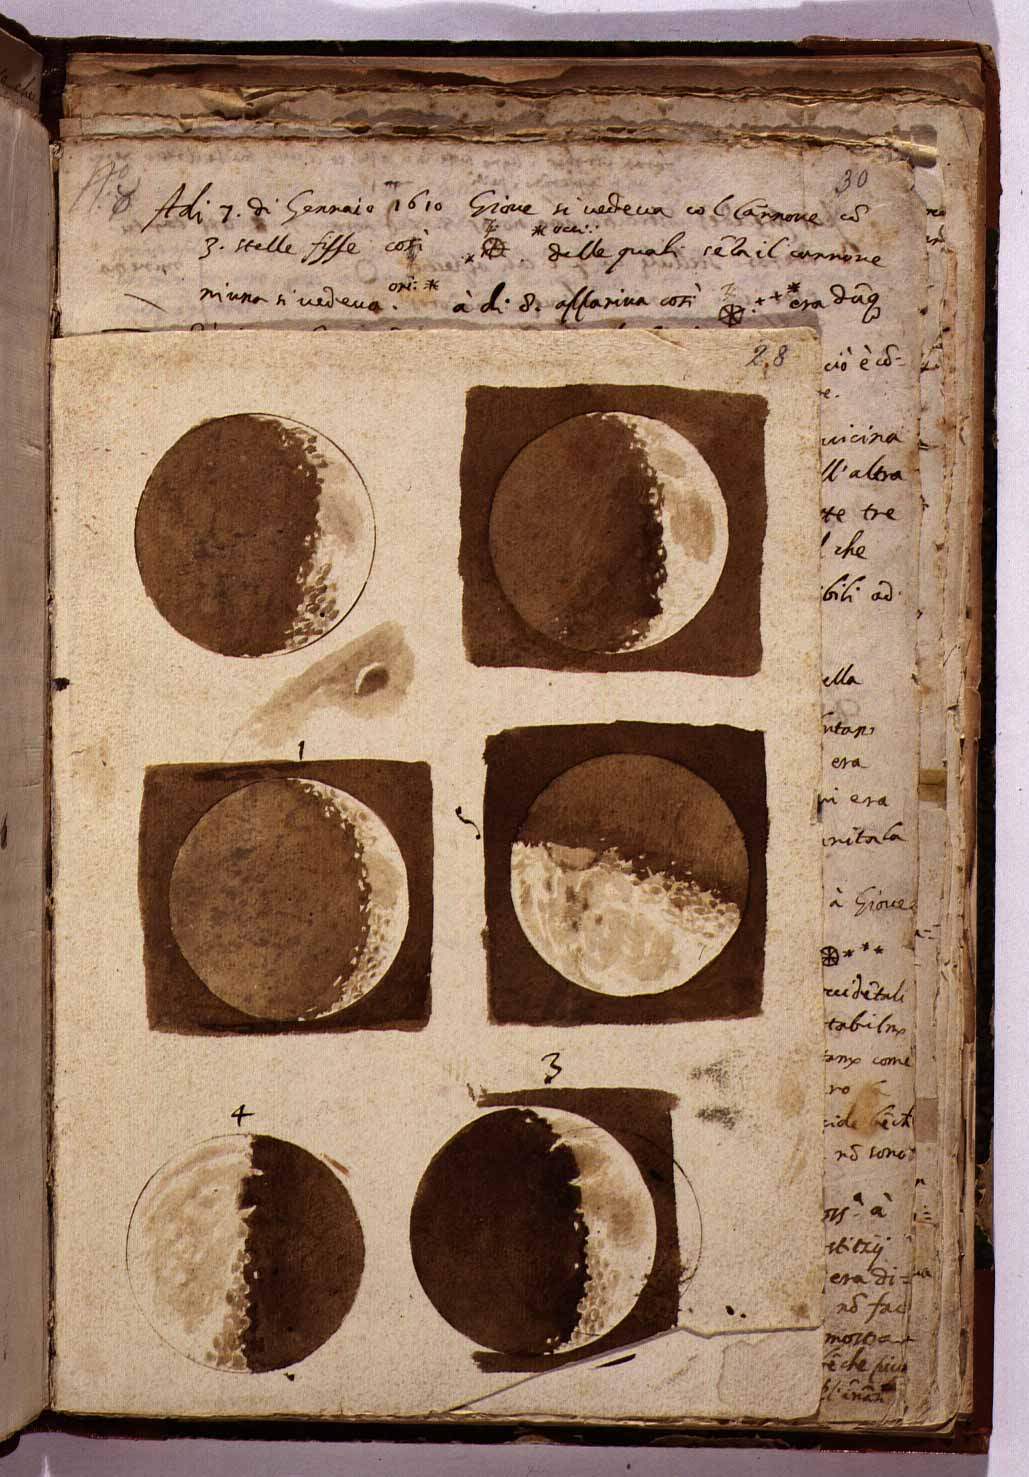 Moon drawings of Galileo Galilei